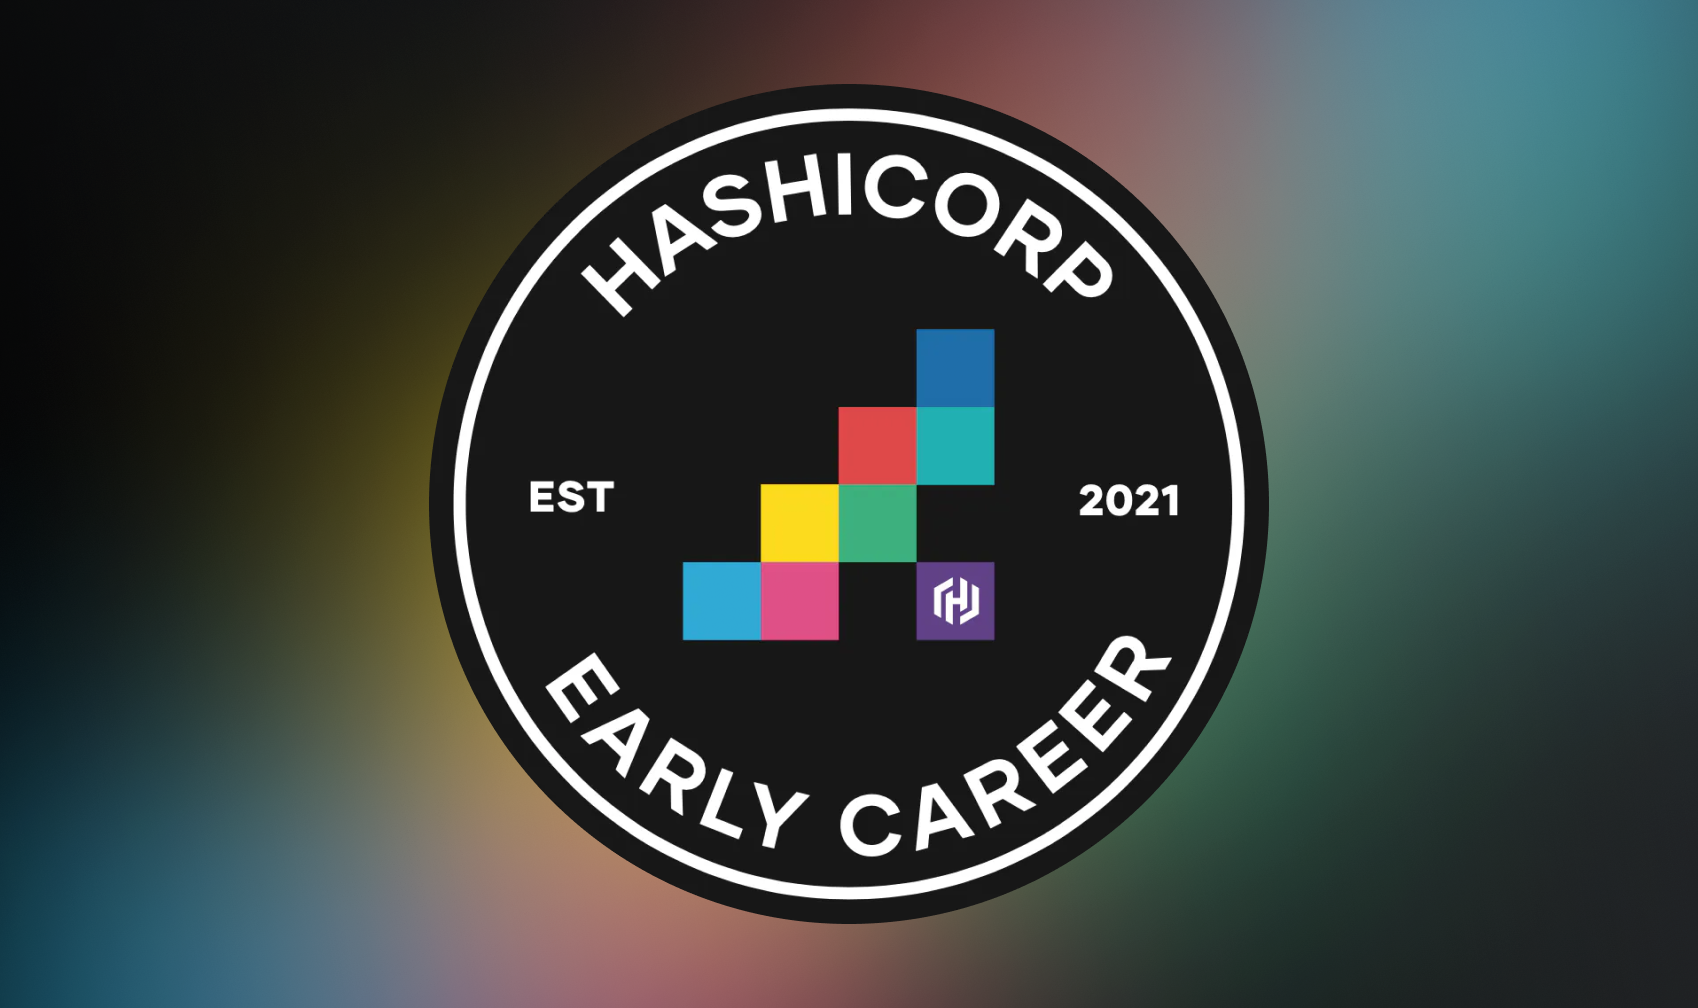 HashiCorp Early Career Thumbnail